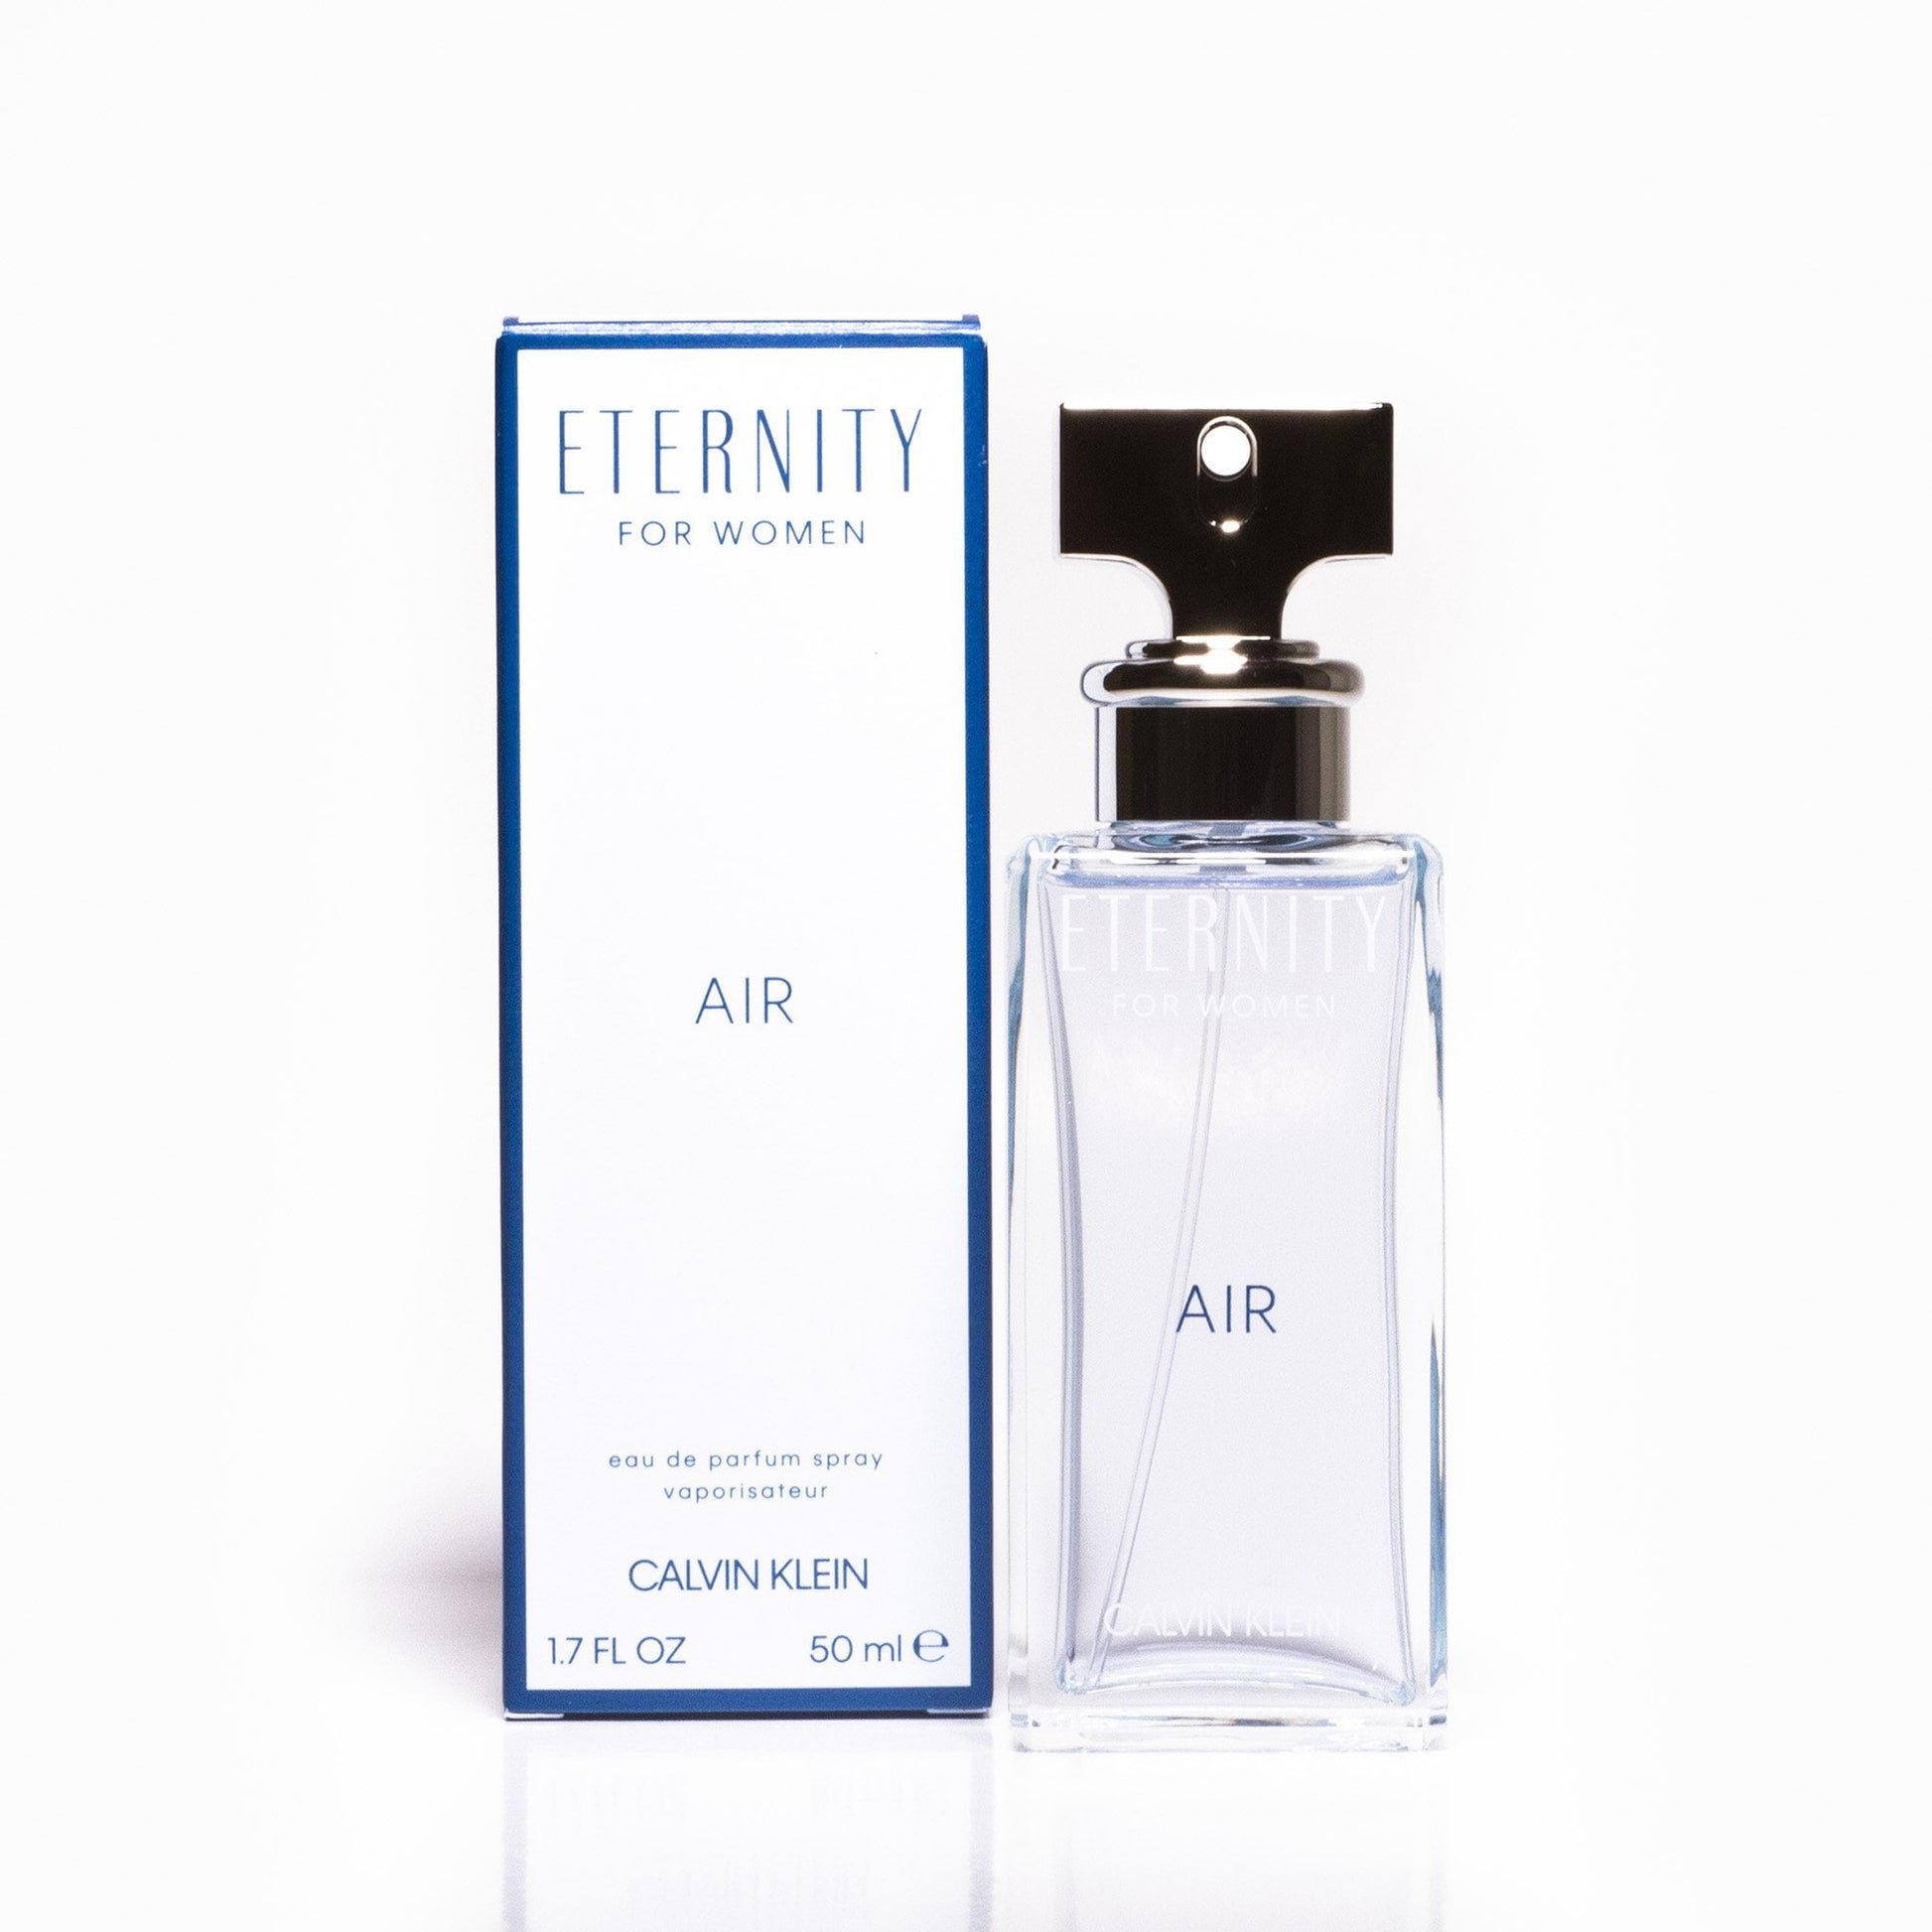 Eternity Air Eau de Parfum Spray for Women by Calvin Klein, Product image 1